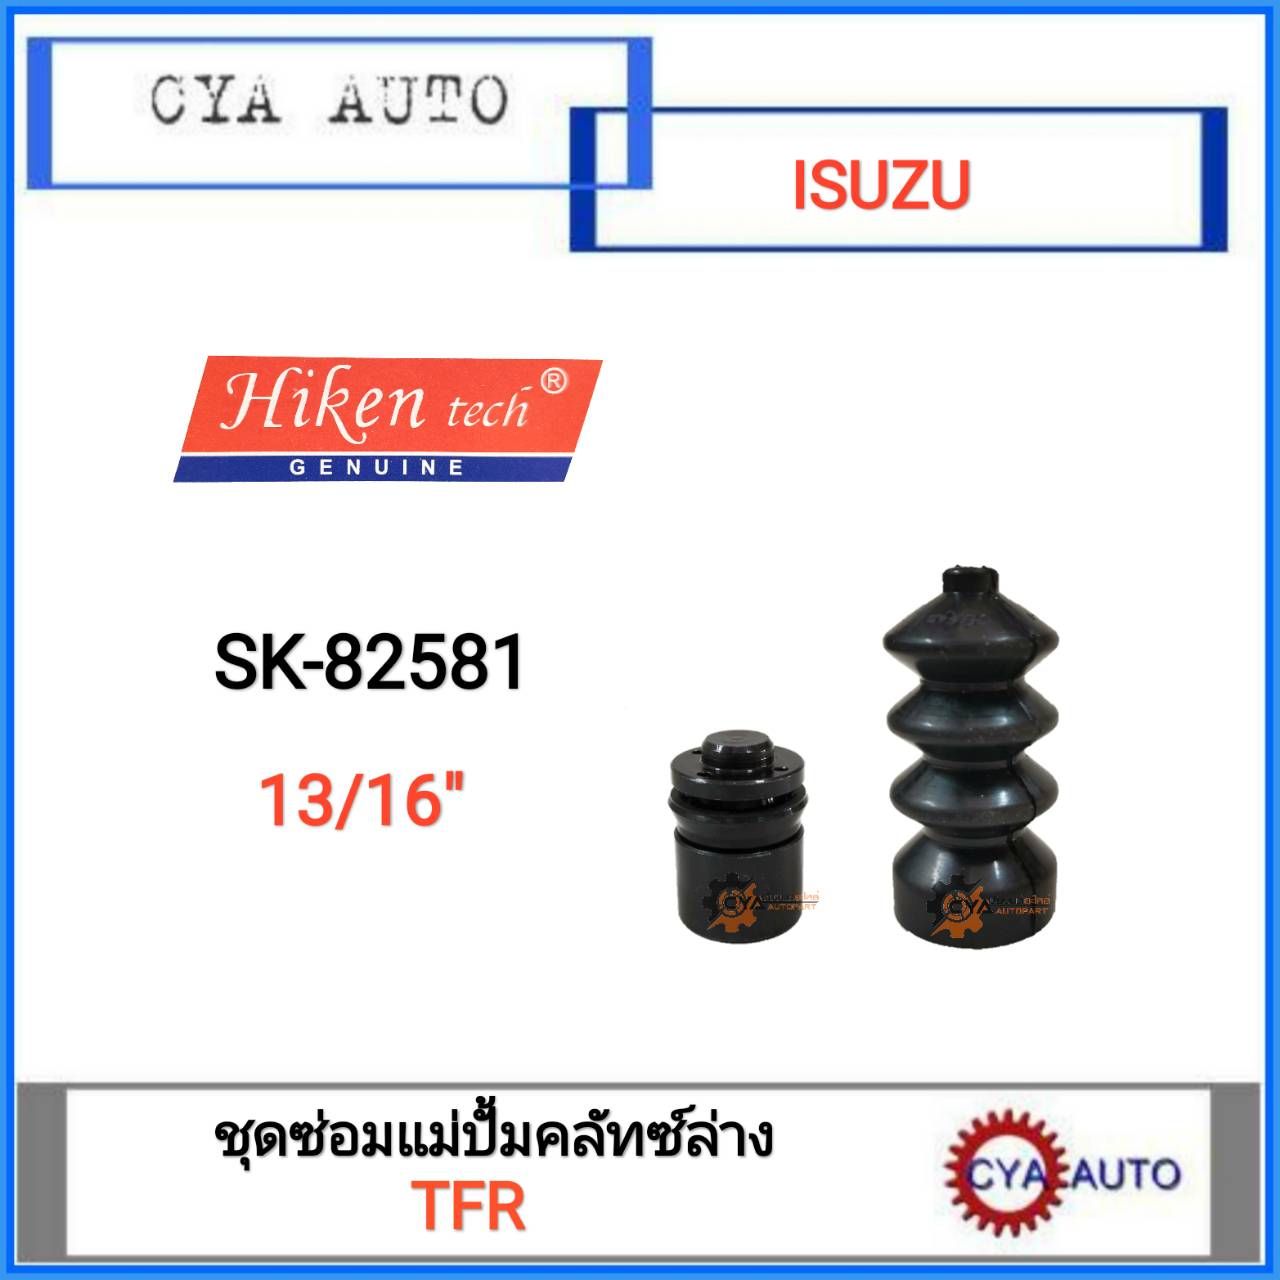 Hiken (SK-82581) ชุดซ่อม​ แม่ปั้มคลัทซ์ล่าง​ ISUZU  TFR ขนาดลูกสูบ​ 13/16